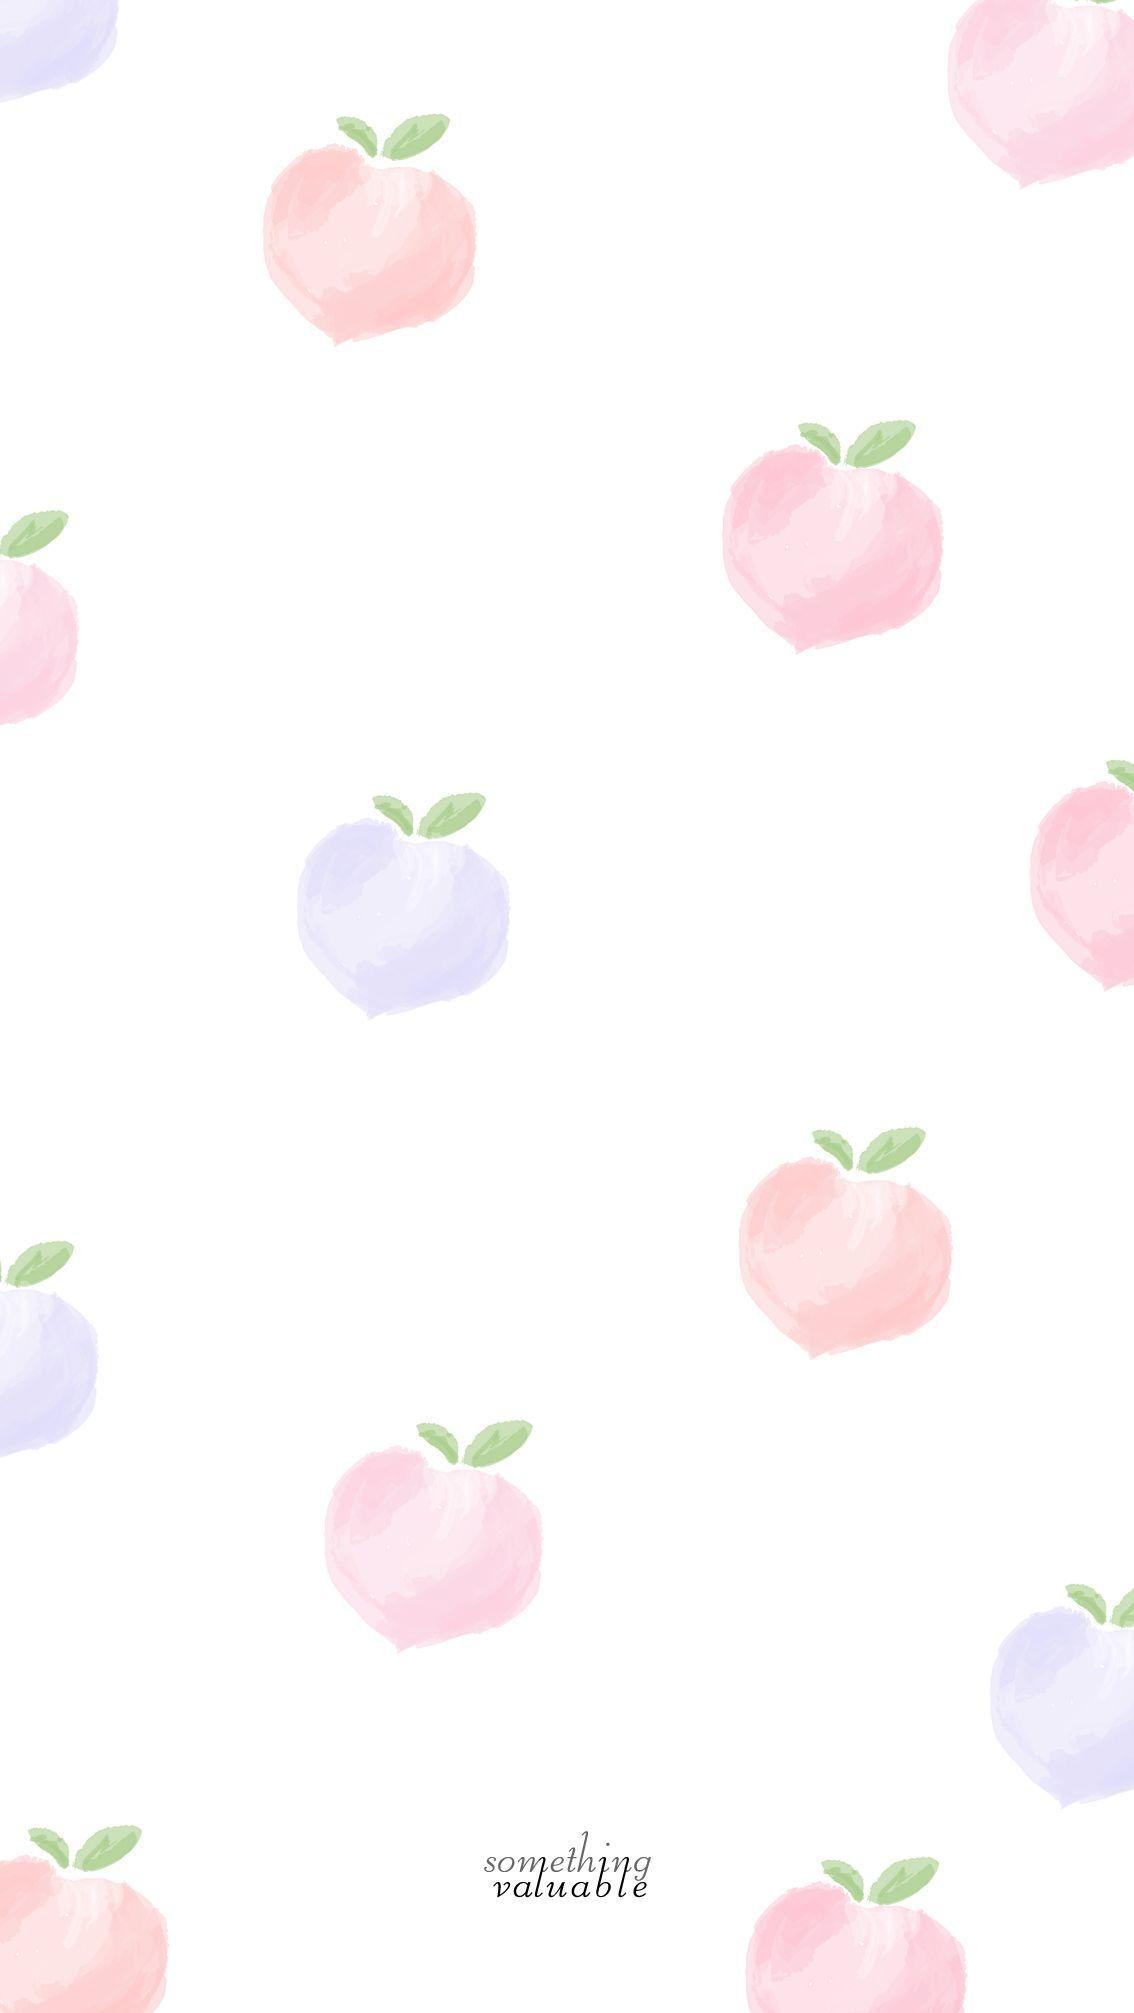 iPhone wallpaper design • peach